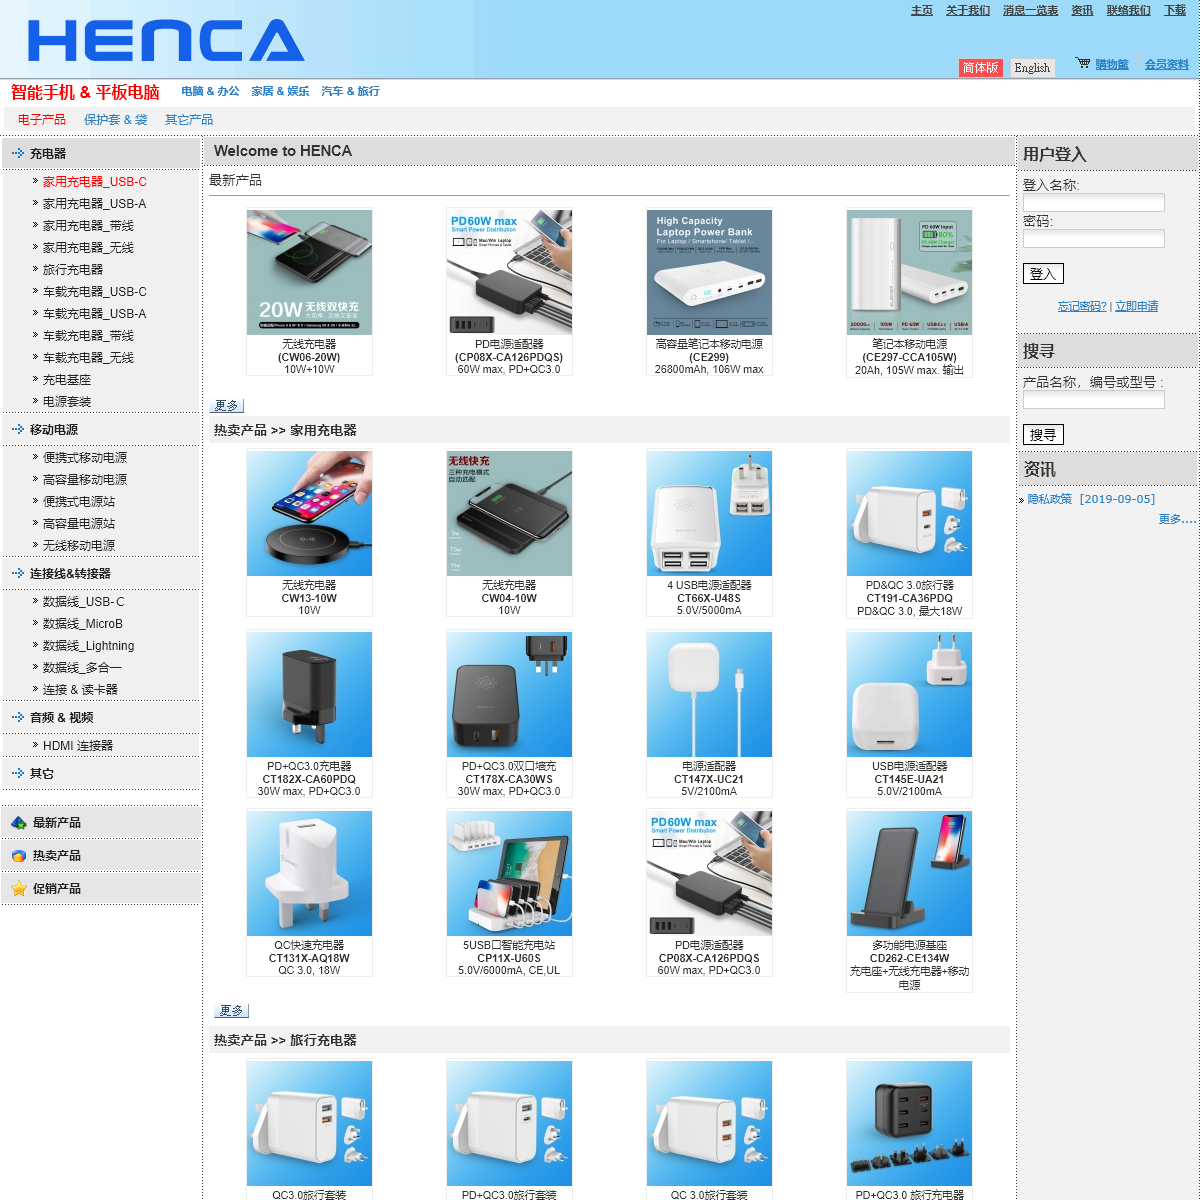 A complete backup of henca.com